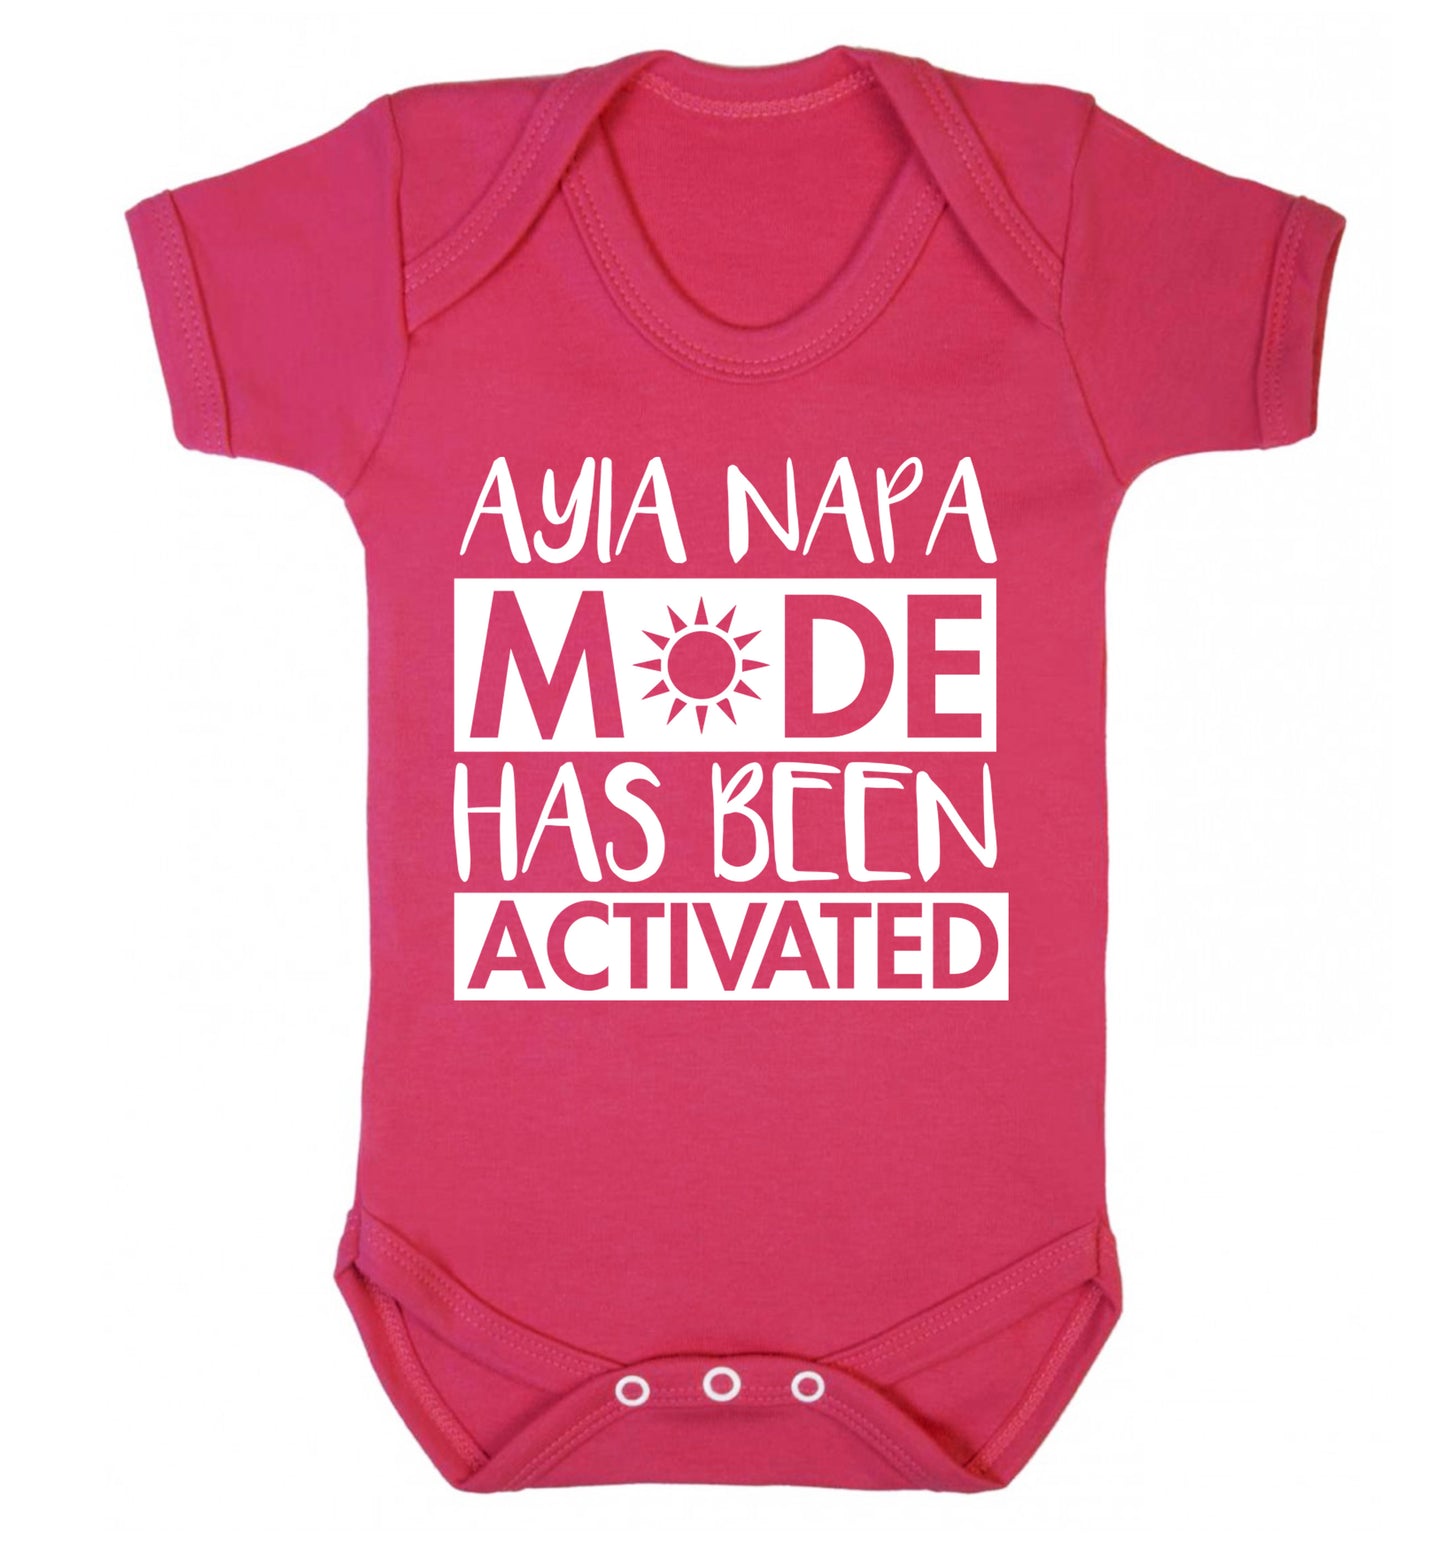 Ayia Napa mode has been activated Baby Vest dark pink 18-24 months